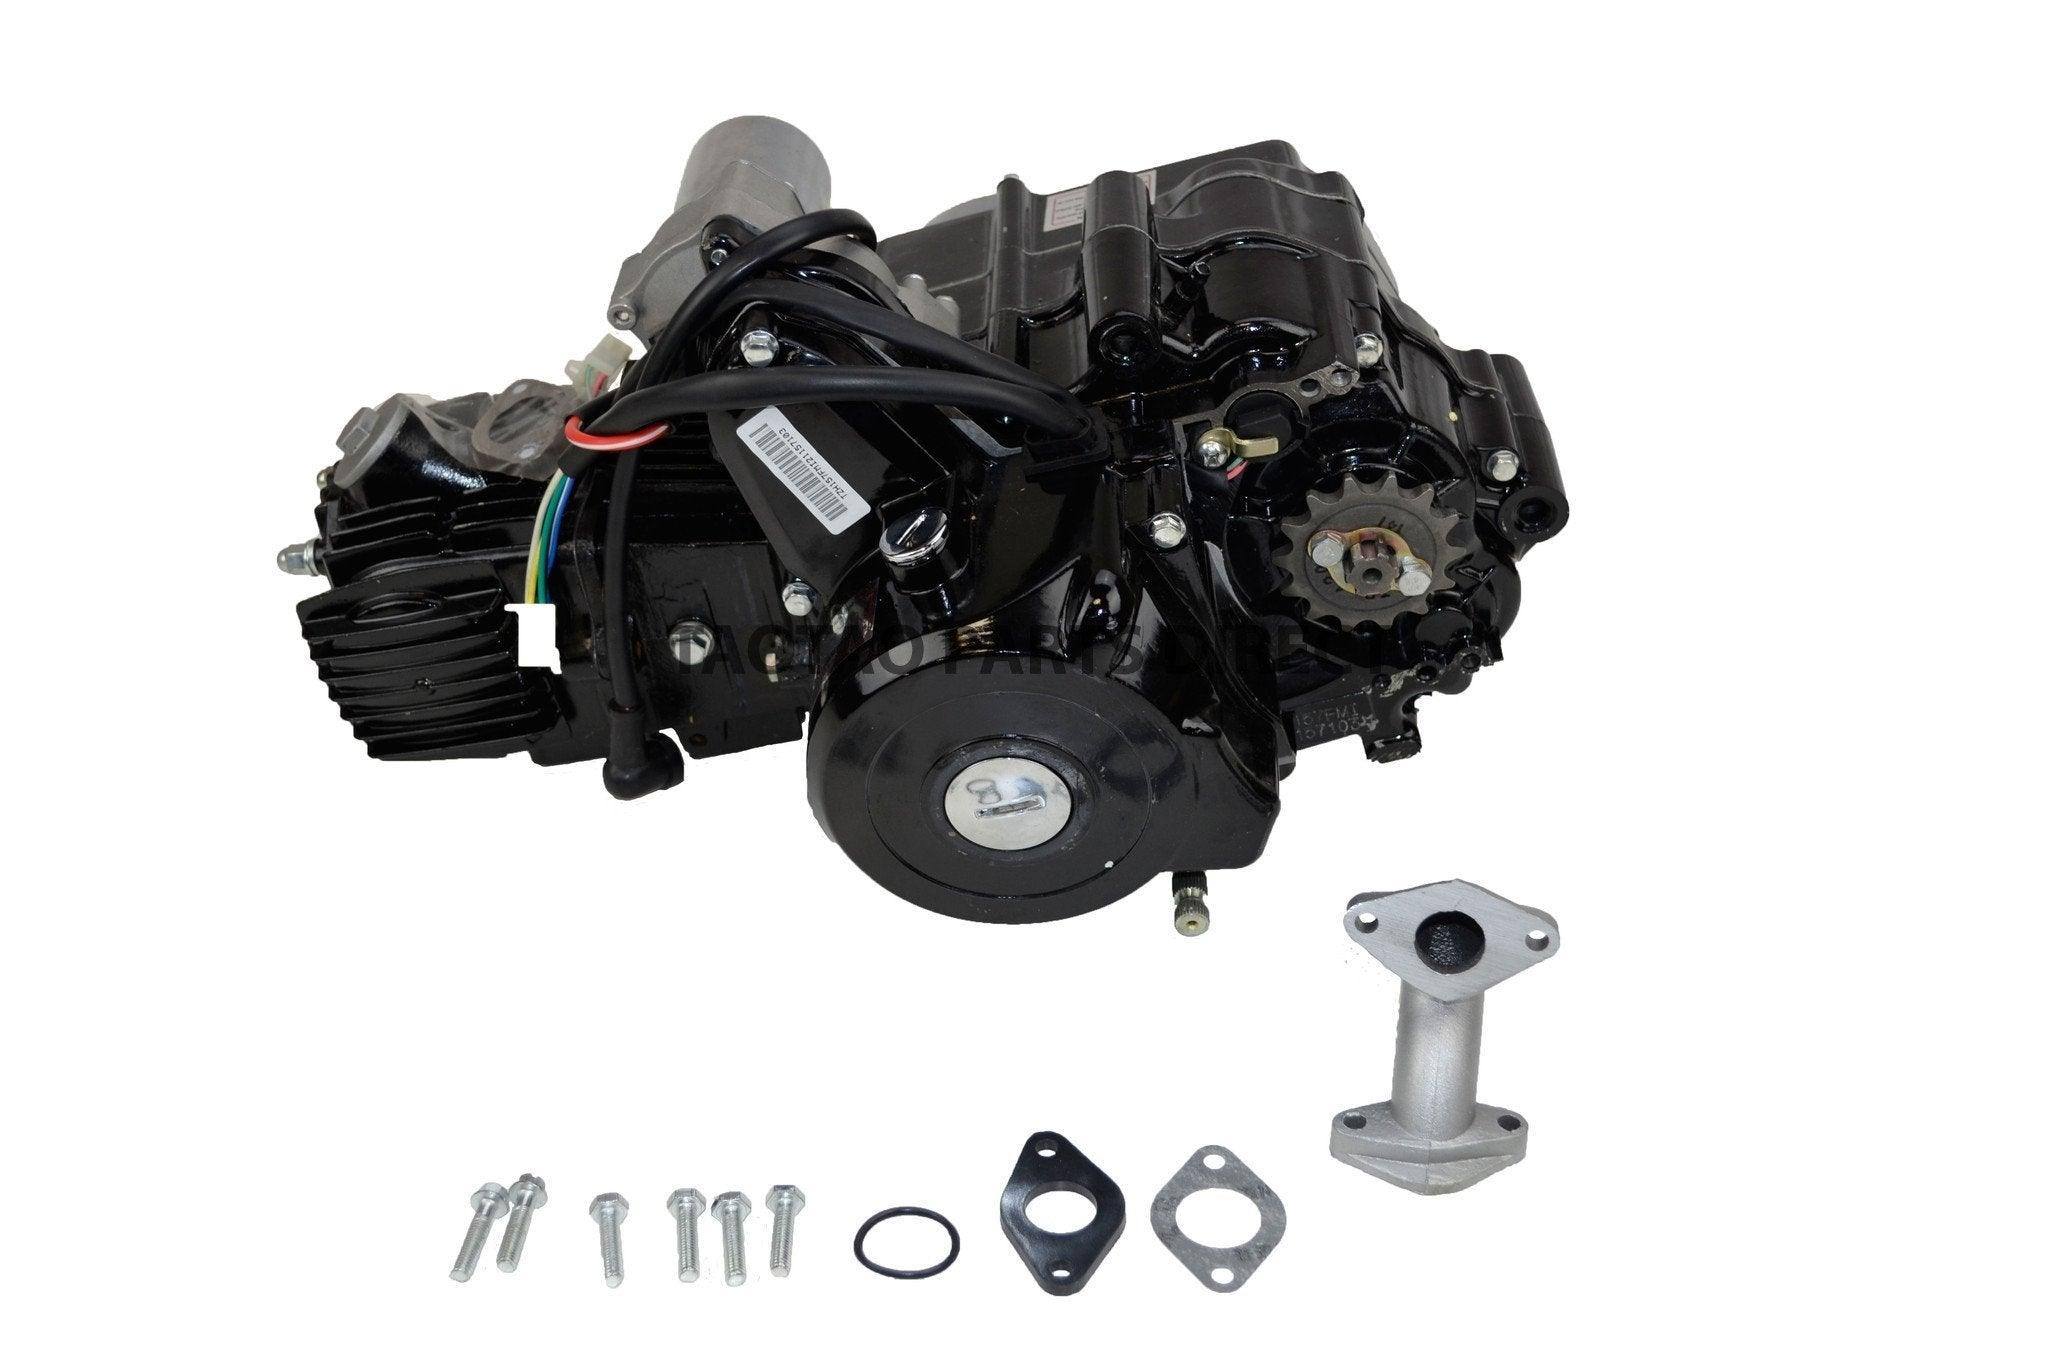 125cc Auto w/ Reverse Engine - TaoTaoPartsDirect.com